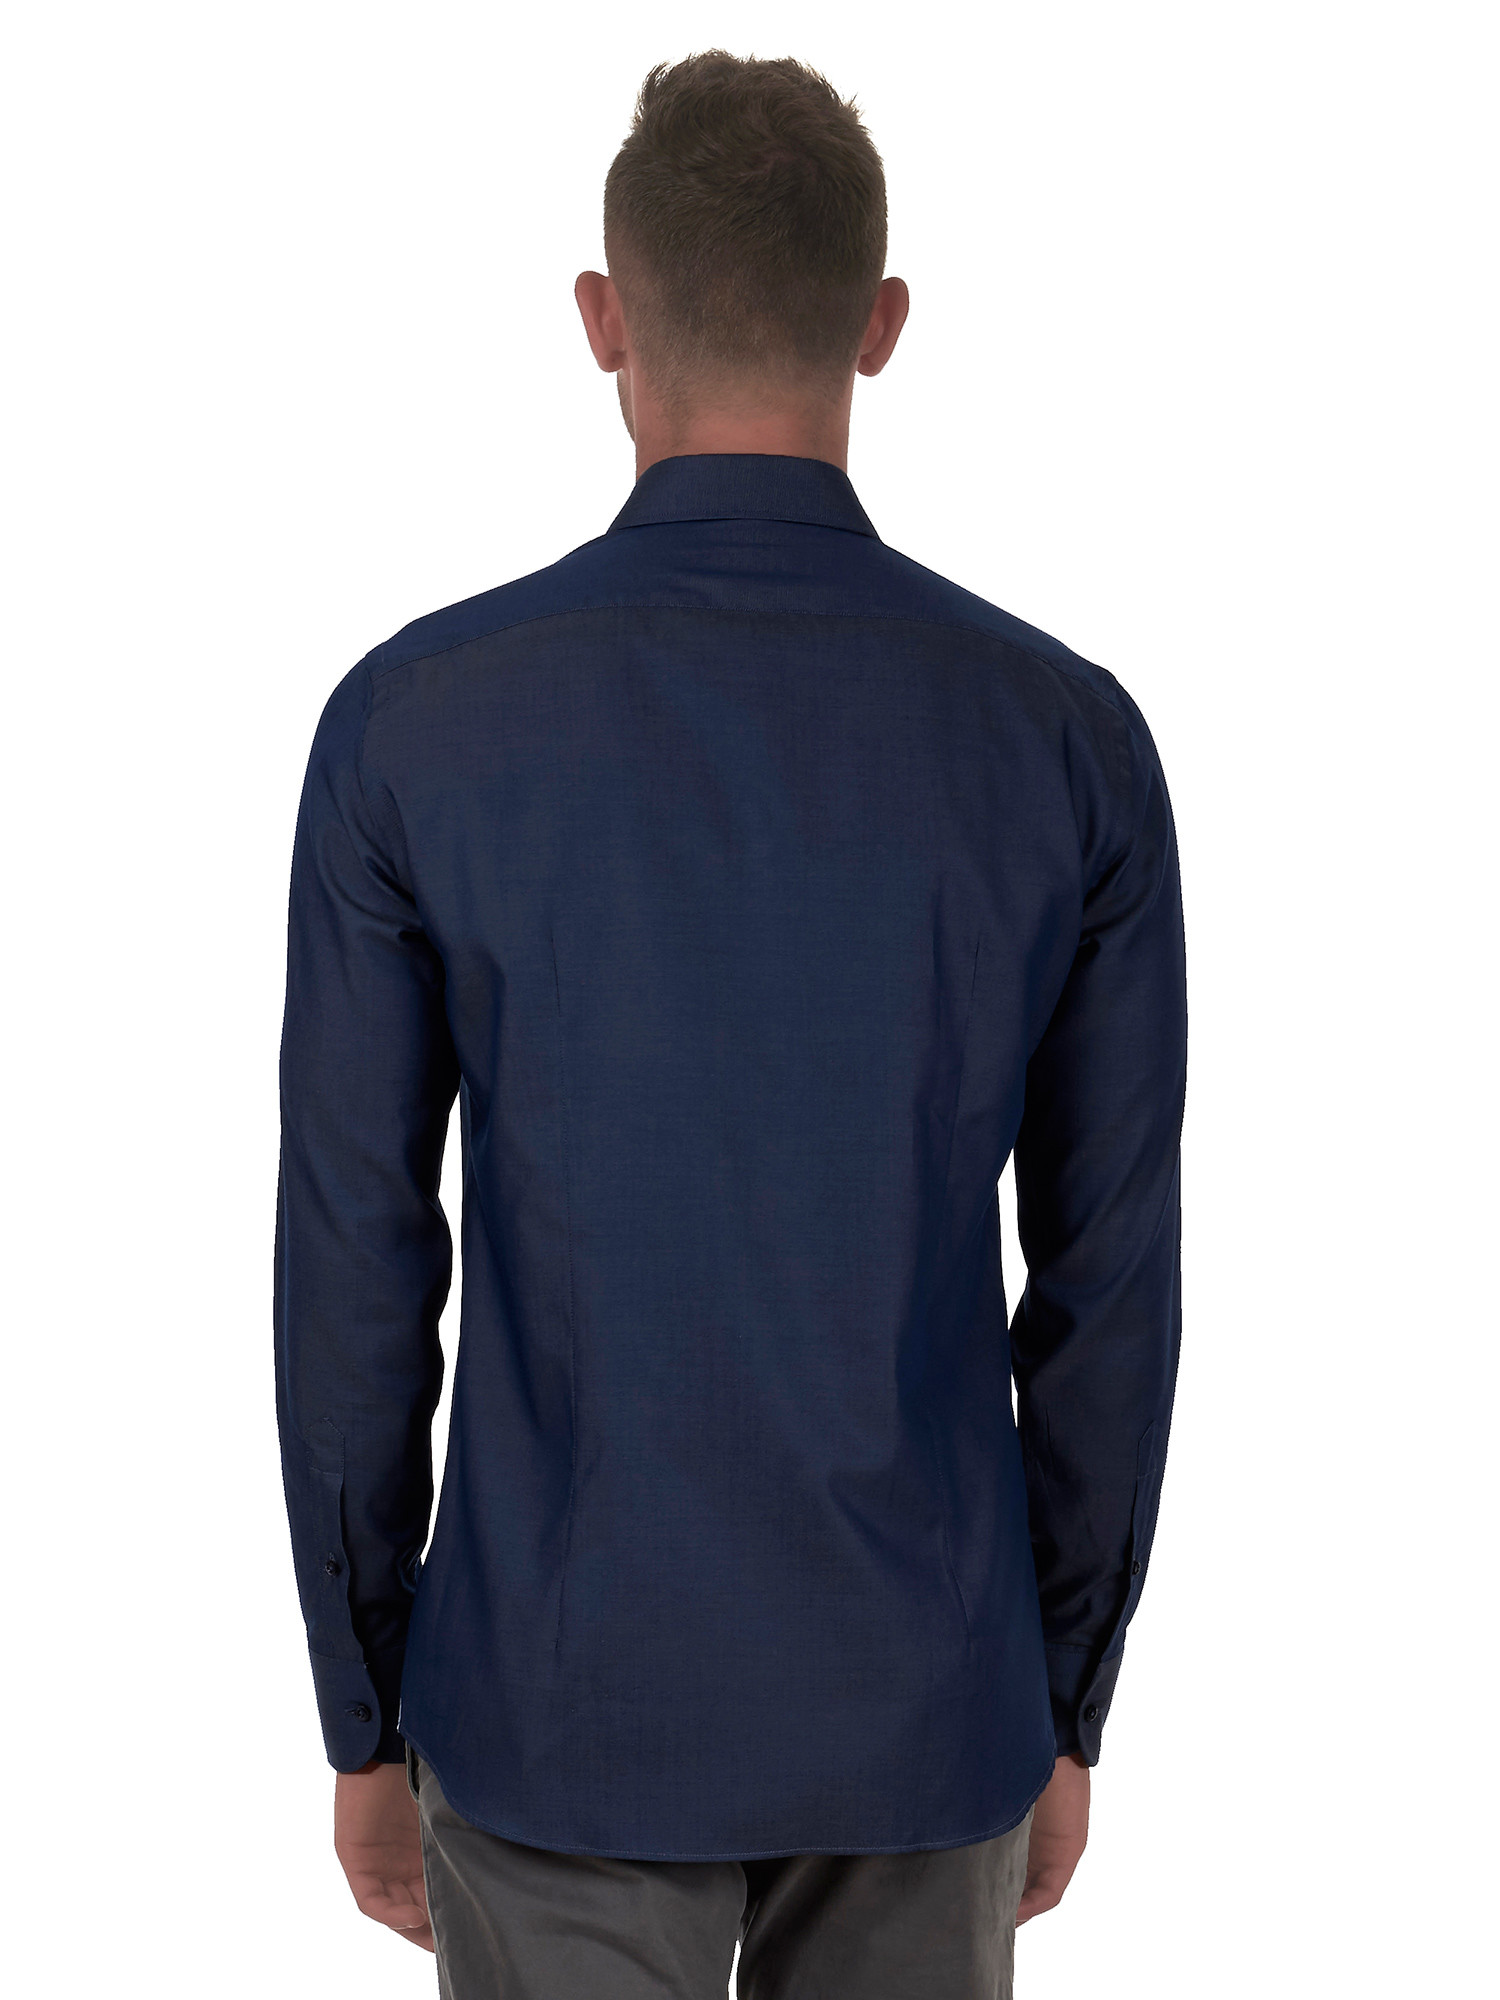 Men's shirt in blue cotton twill fabric Delsiena